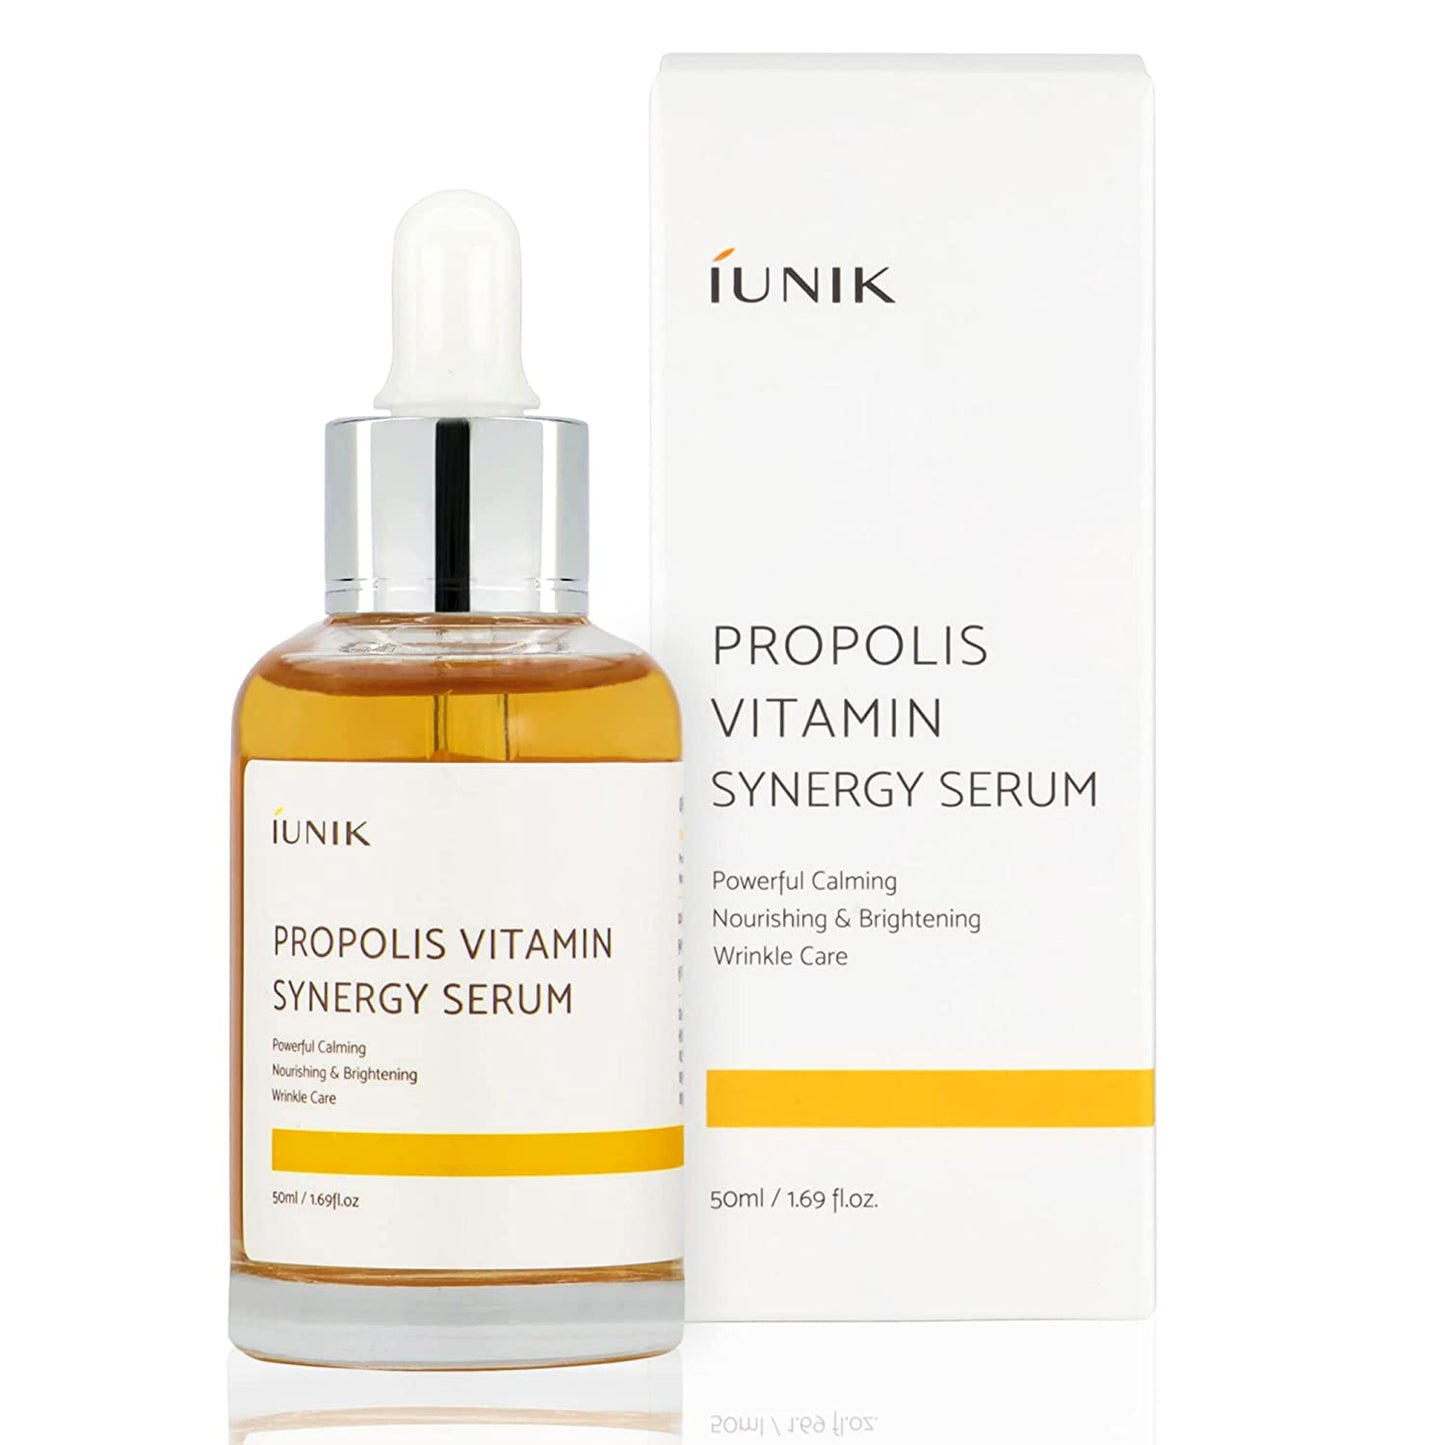 iUNIK Propolis Vitamin Synergy Serum - veido serumas su propoliu - odoscentras.lt